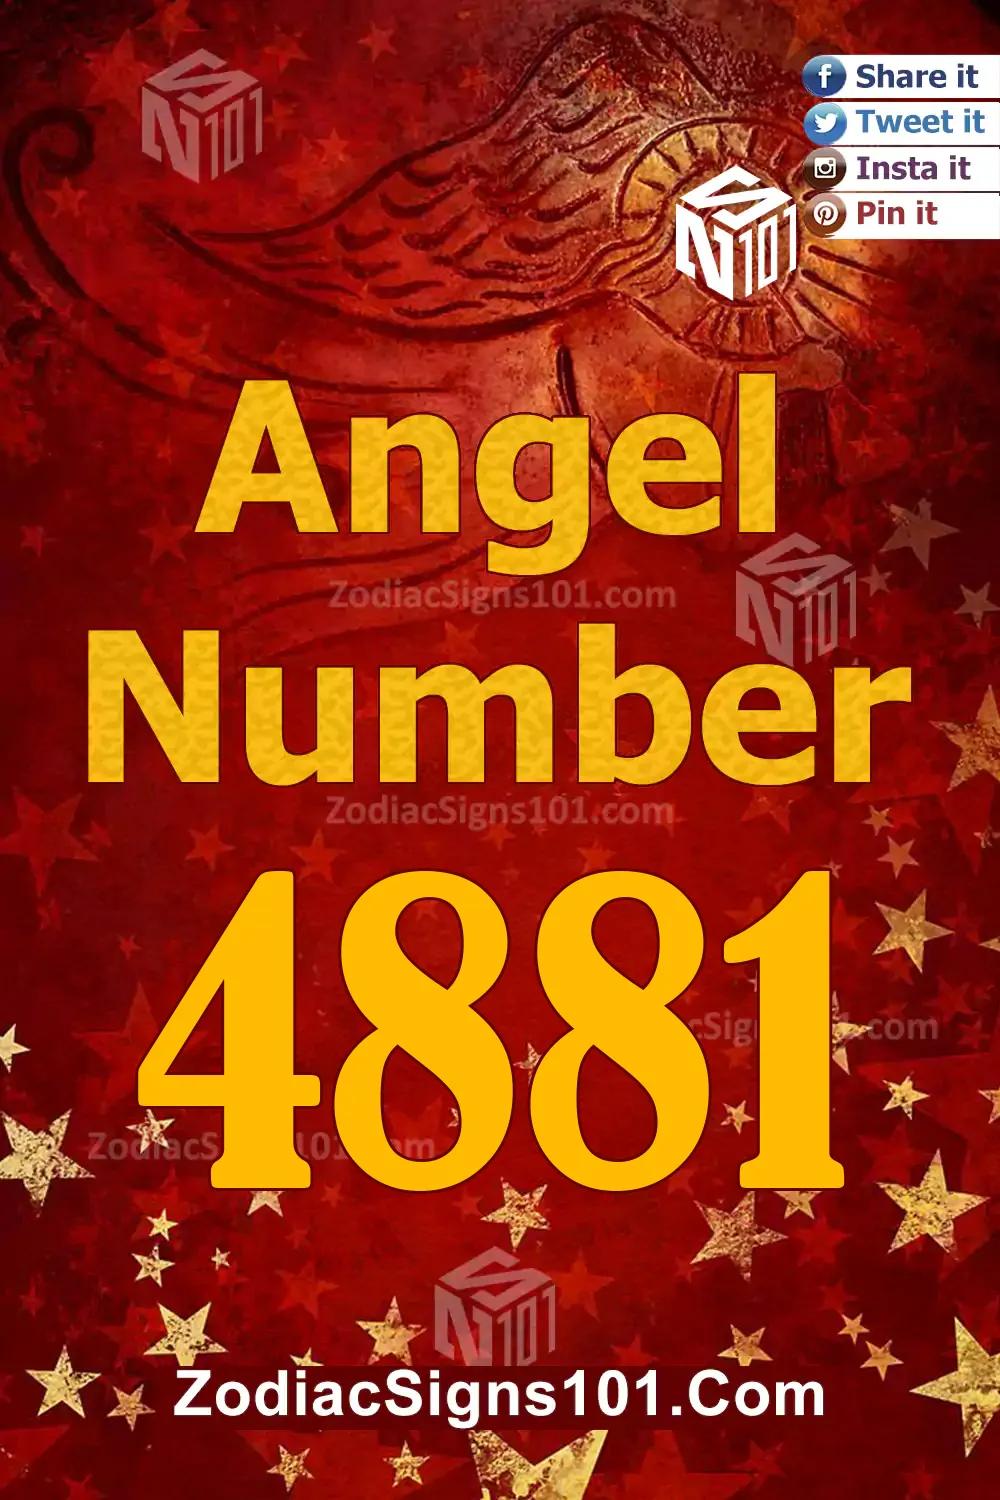 4881-Angel-Number-Meaning.jpg